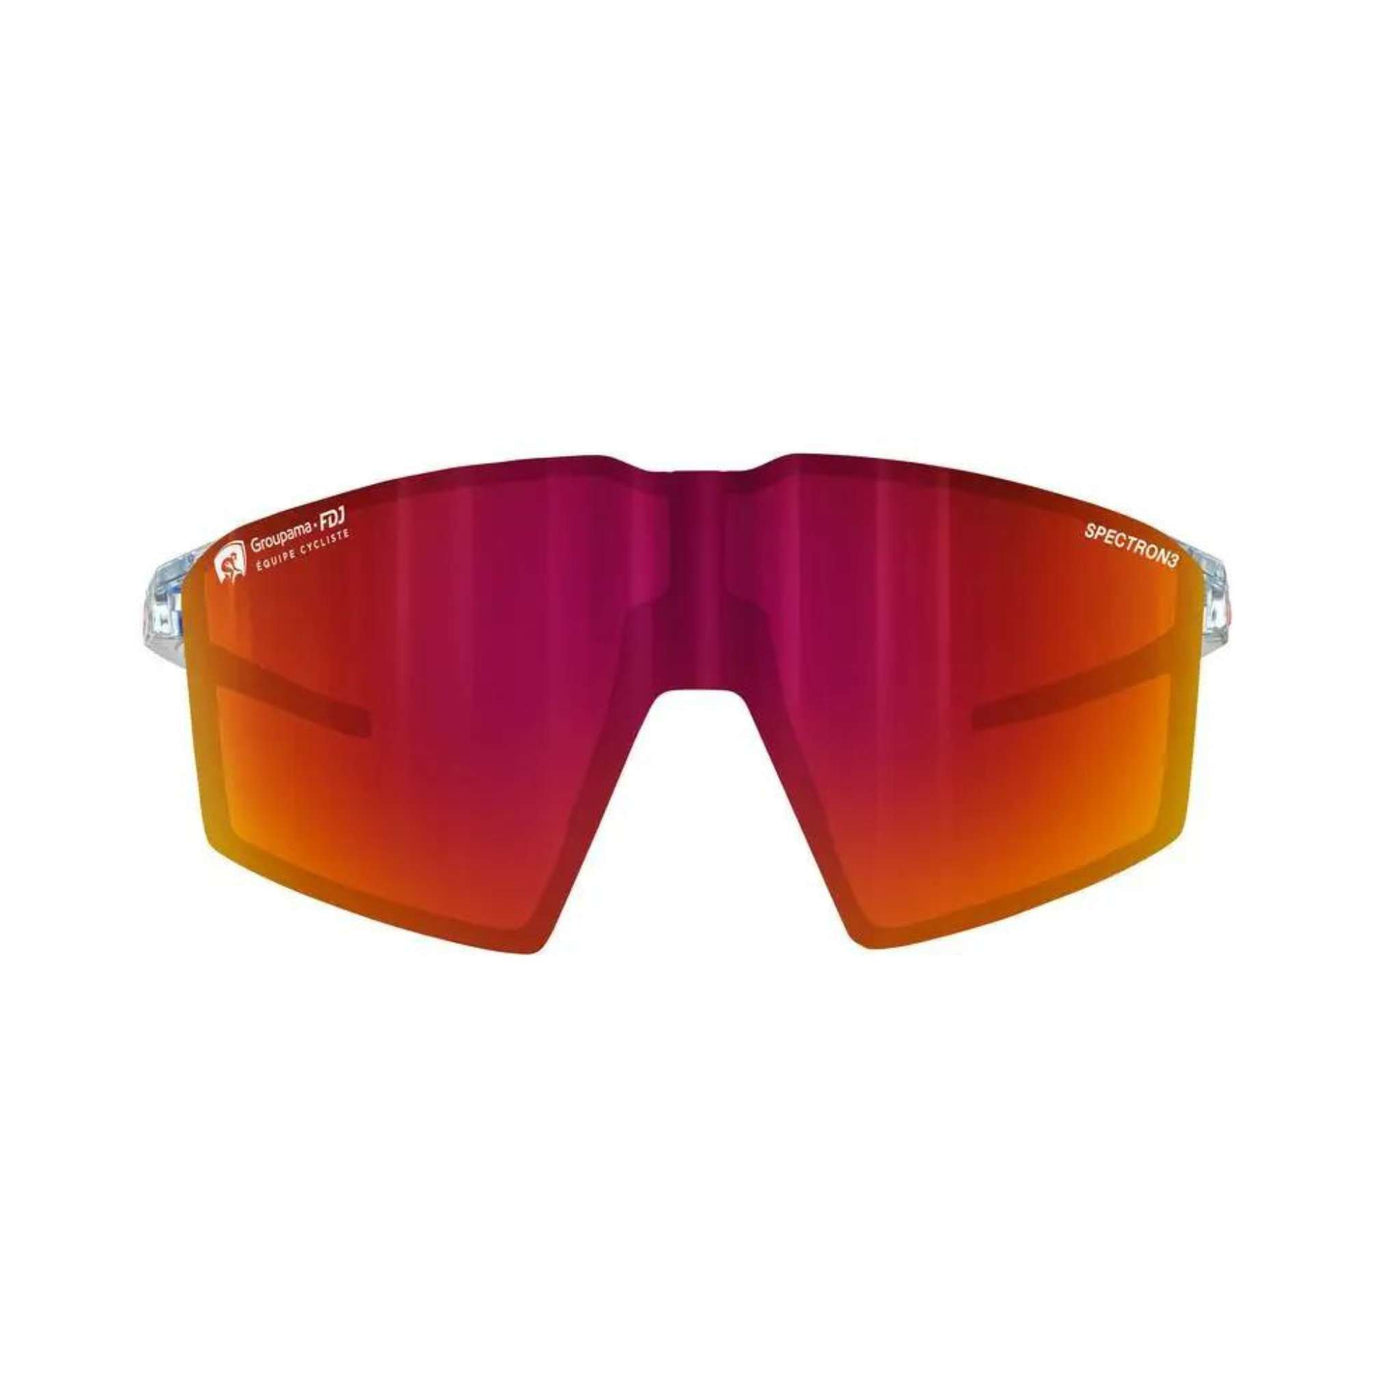 Julbo Edge Groupama-FDJ Crystal/Metalic Blue Sunglasses - Spectron 3CF | Performance Sunglasses | Further Faster Christchurch NZ